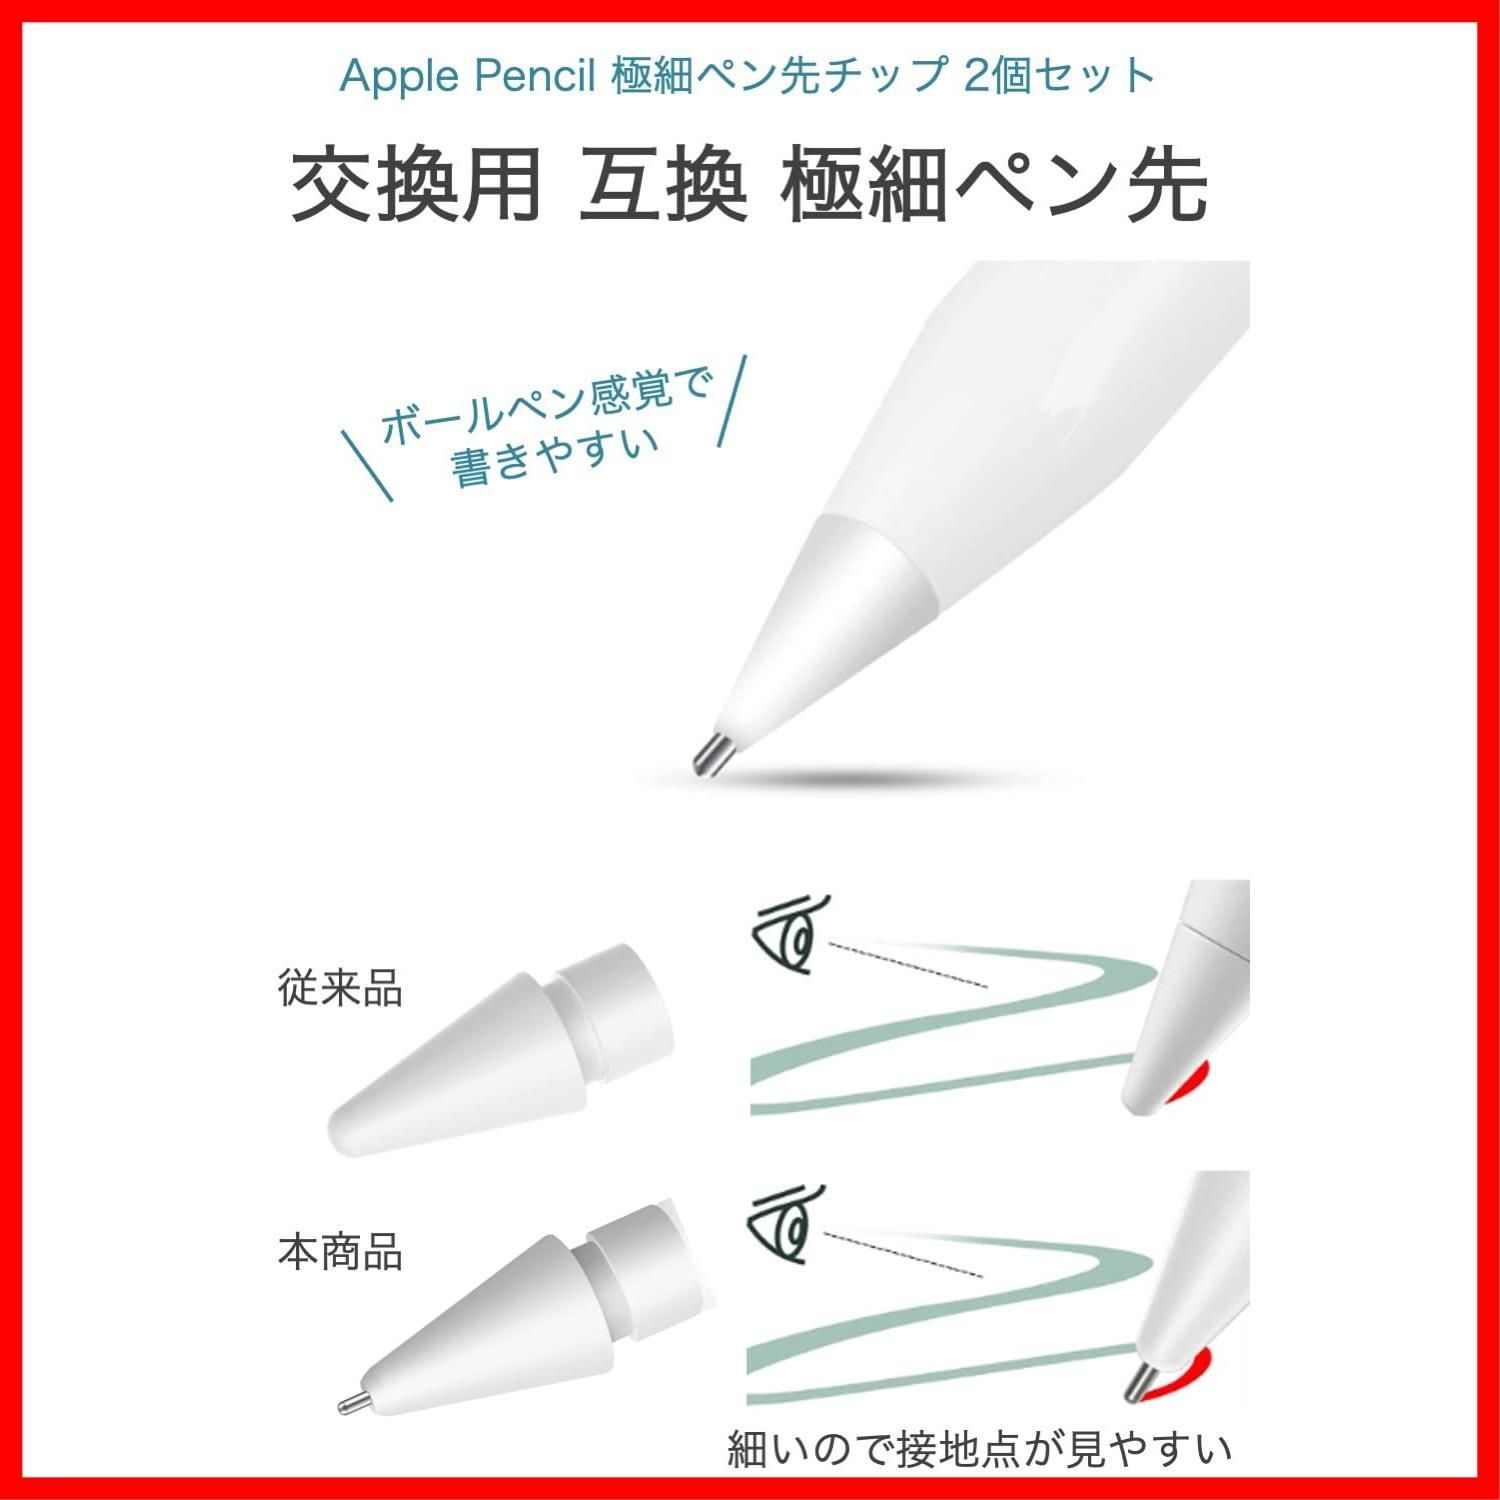 wumio] Apple Pencil 極細 ペン先 2個セット 互換 替え芯 交換 第1世代 